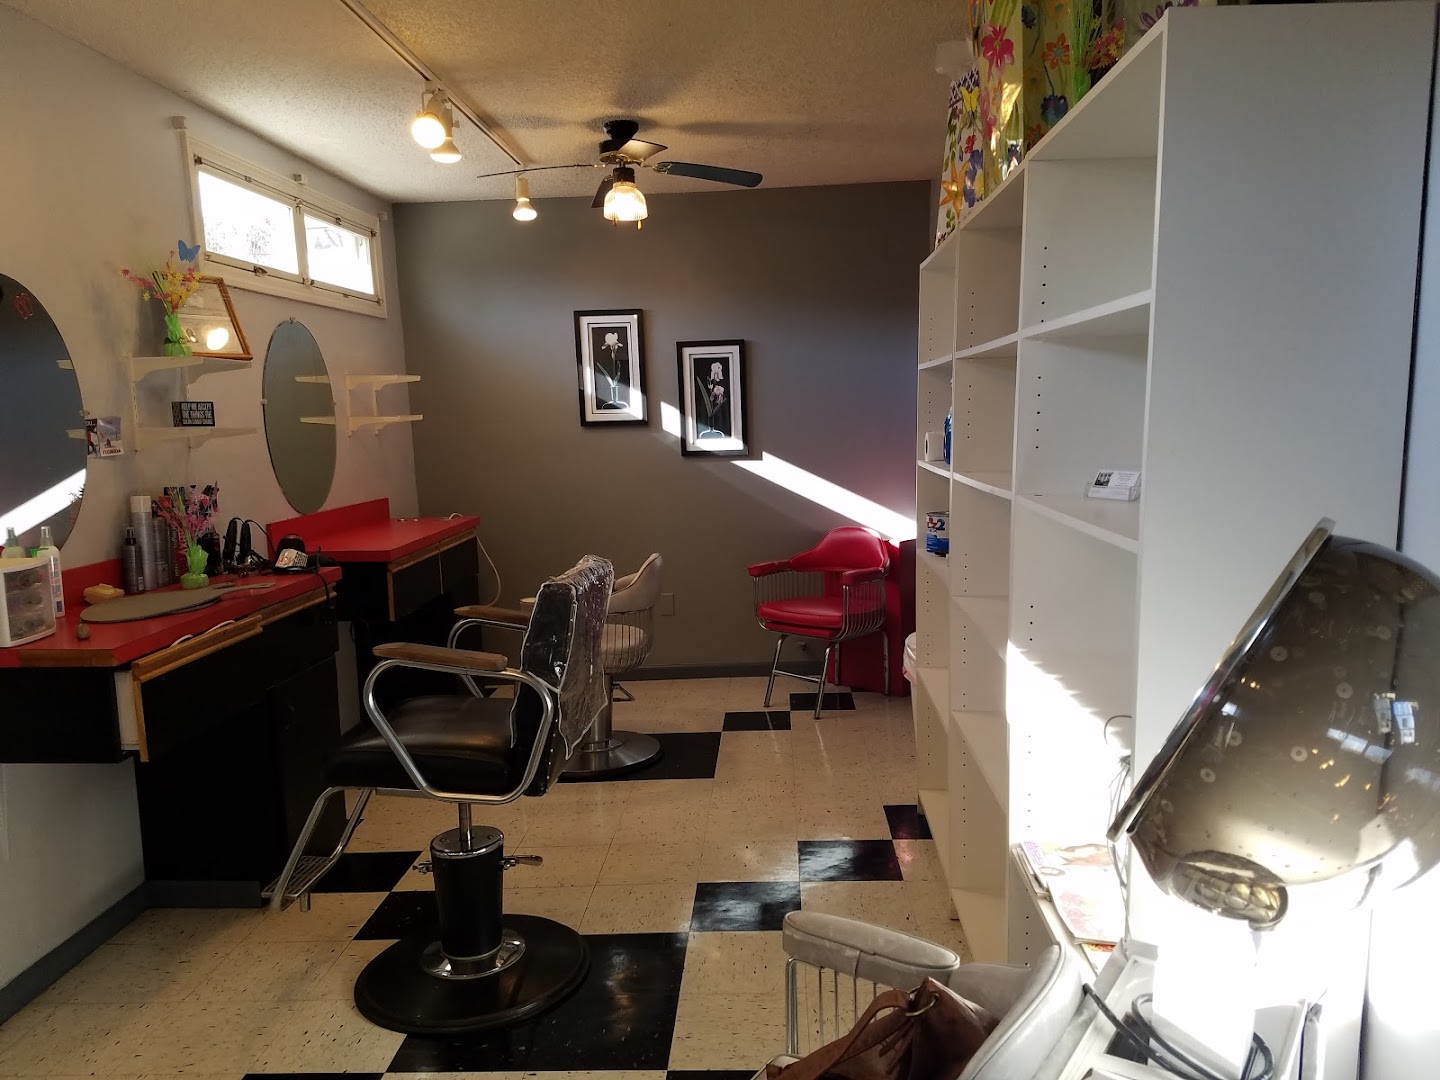 Shear Magic Salon/Permanent Makeup Studio